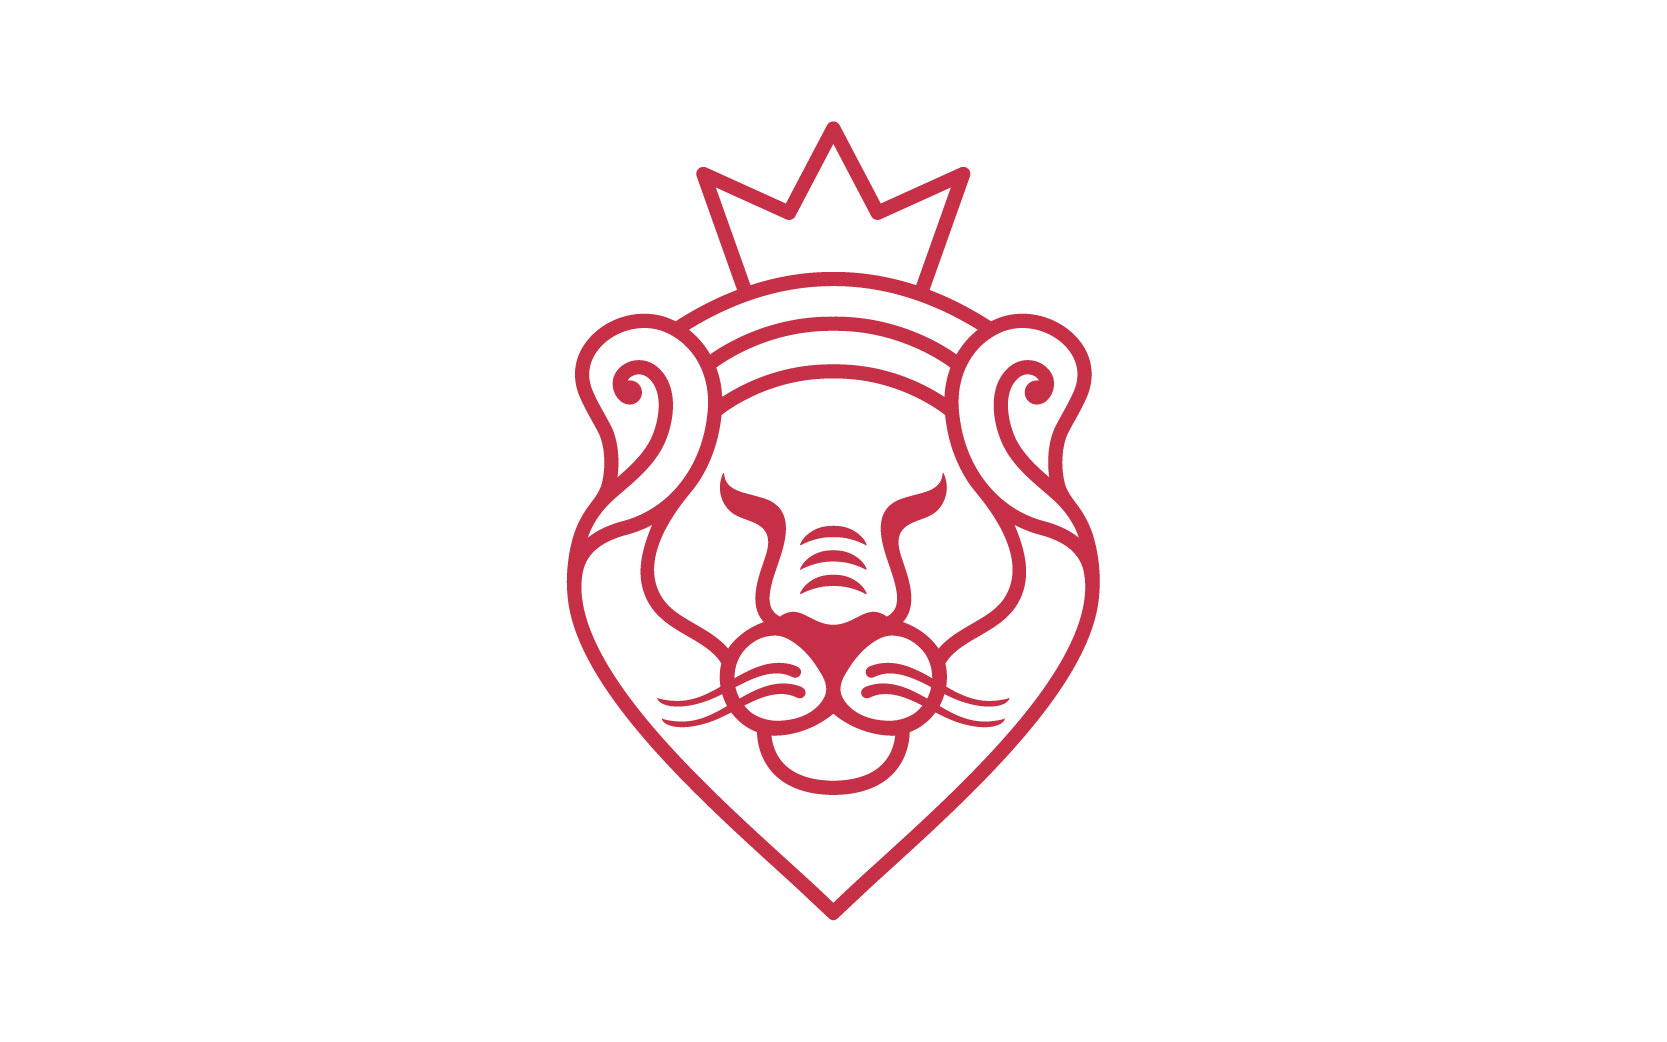 Awesome royal lion logo design Royalty Free Vector Image